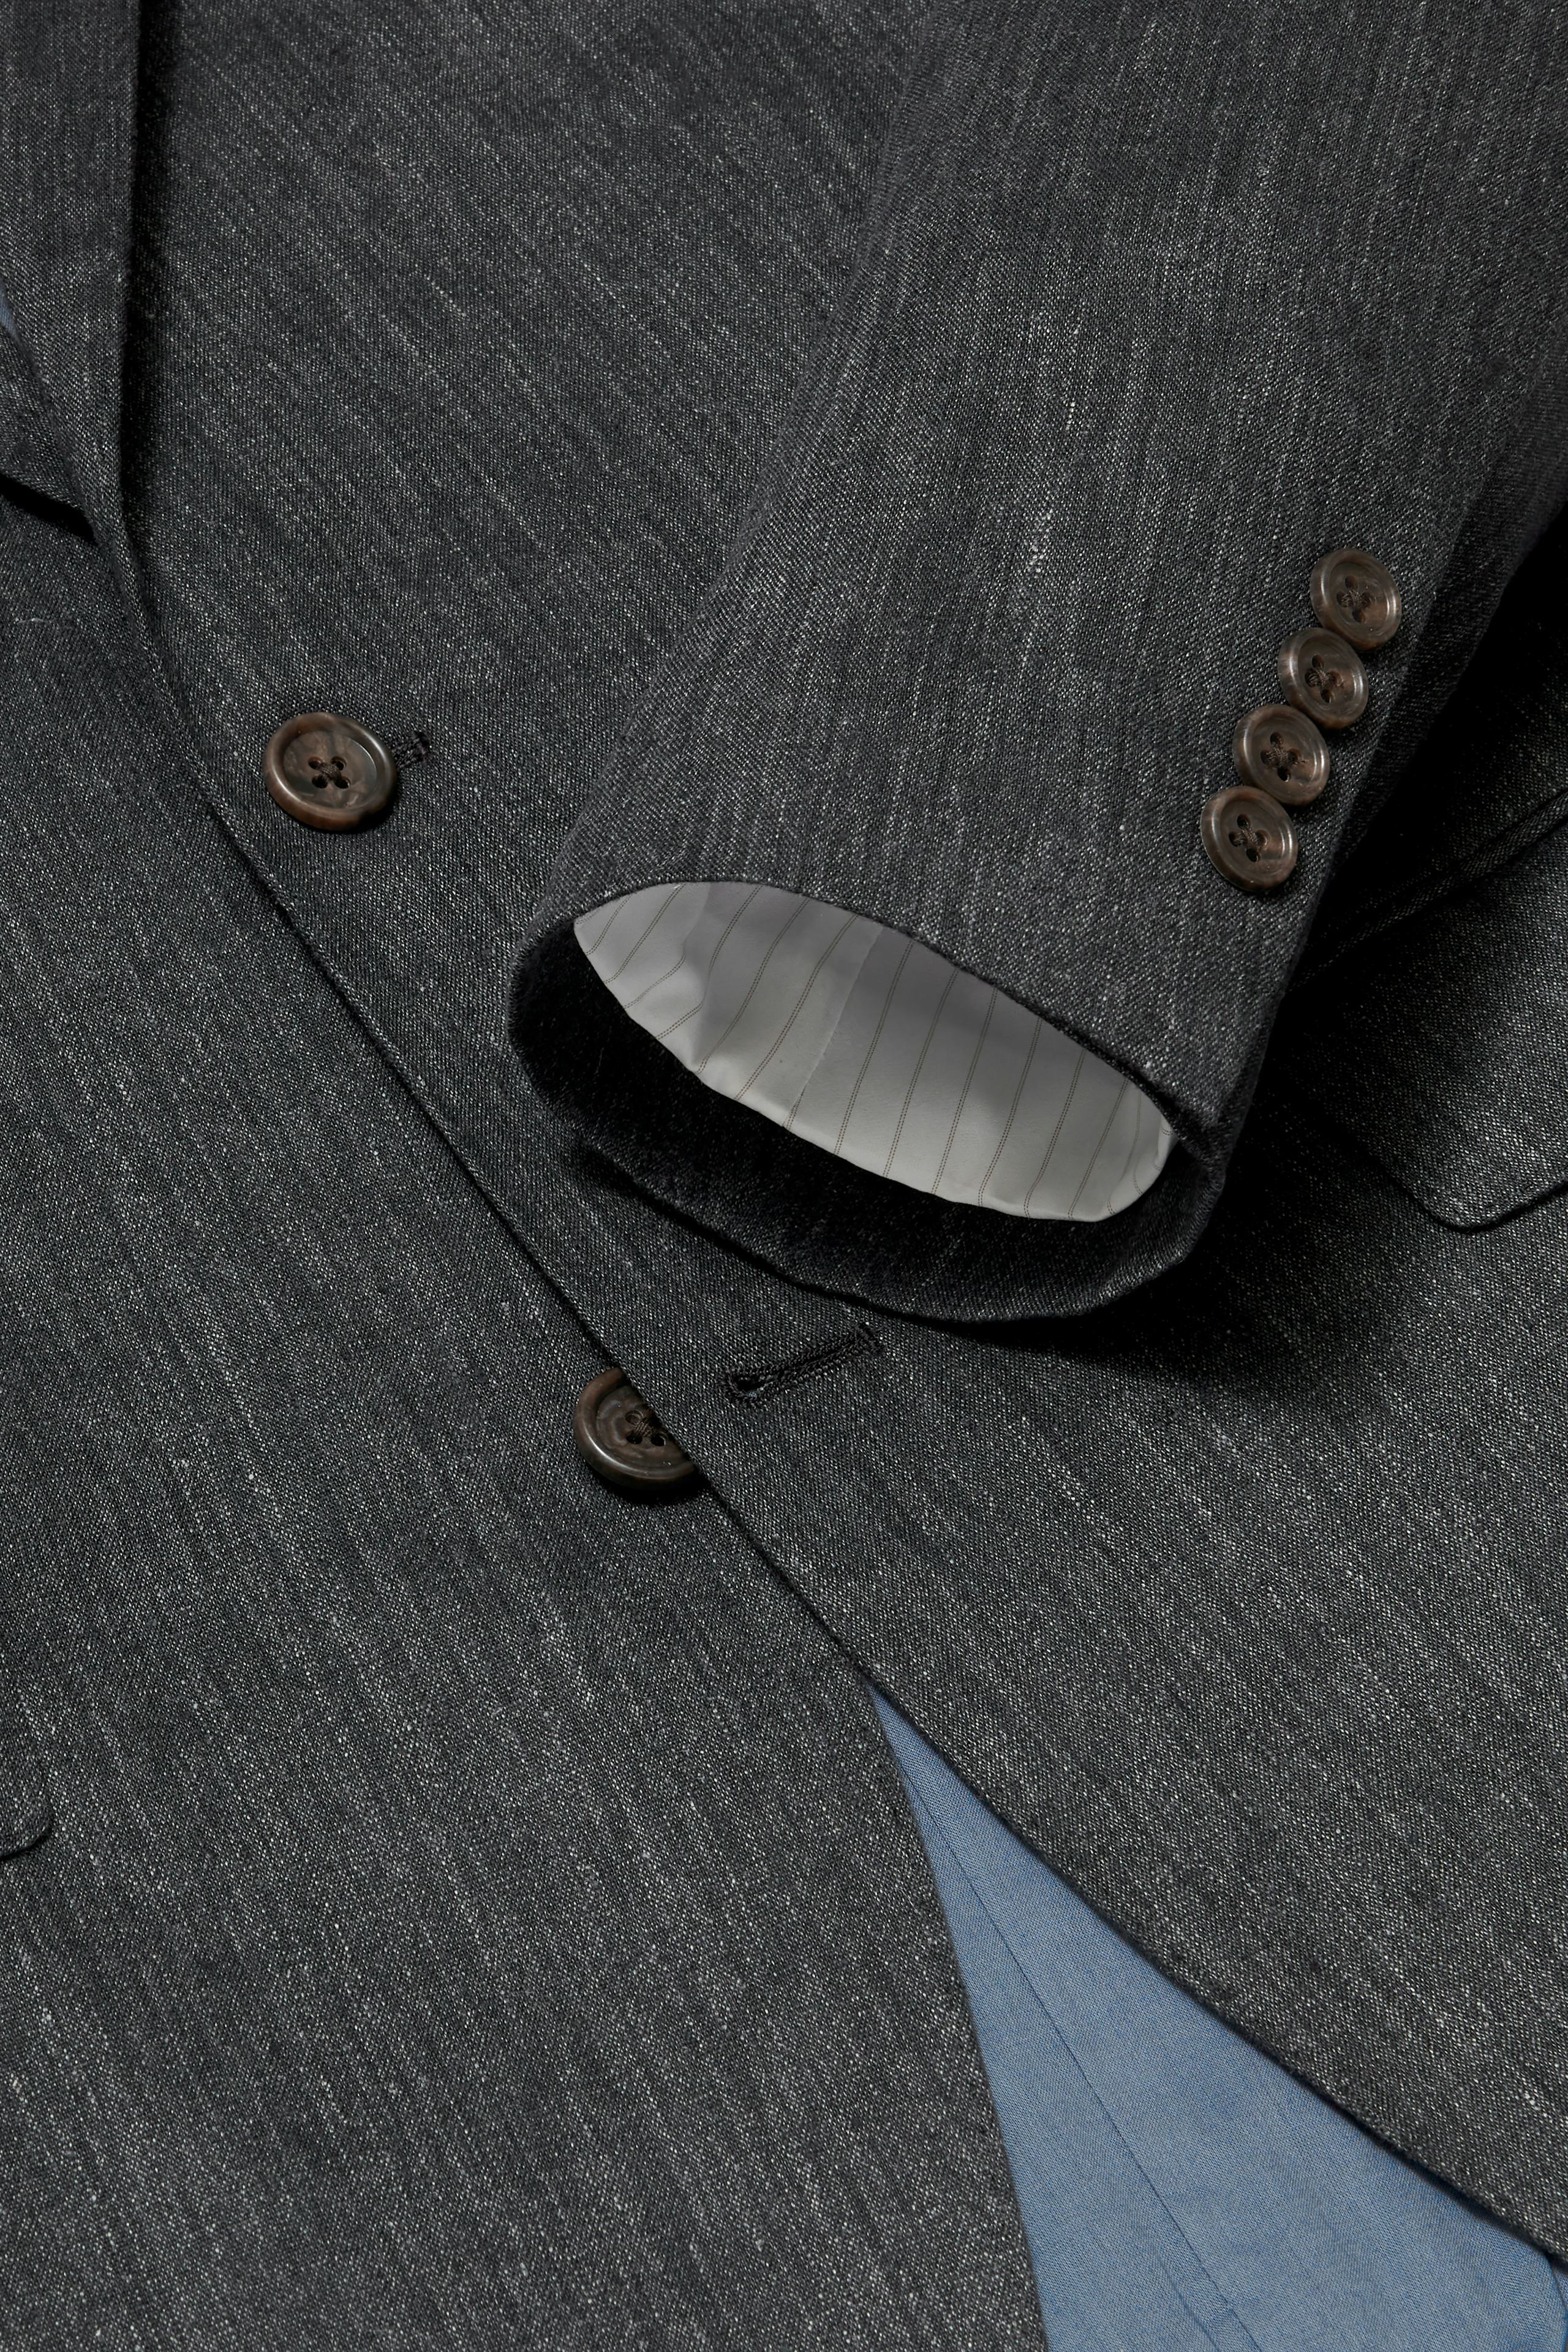 Italian Stretch Linen Suit Jacket